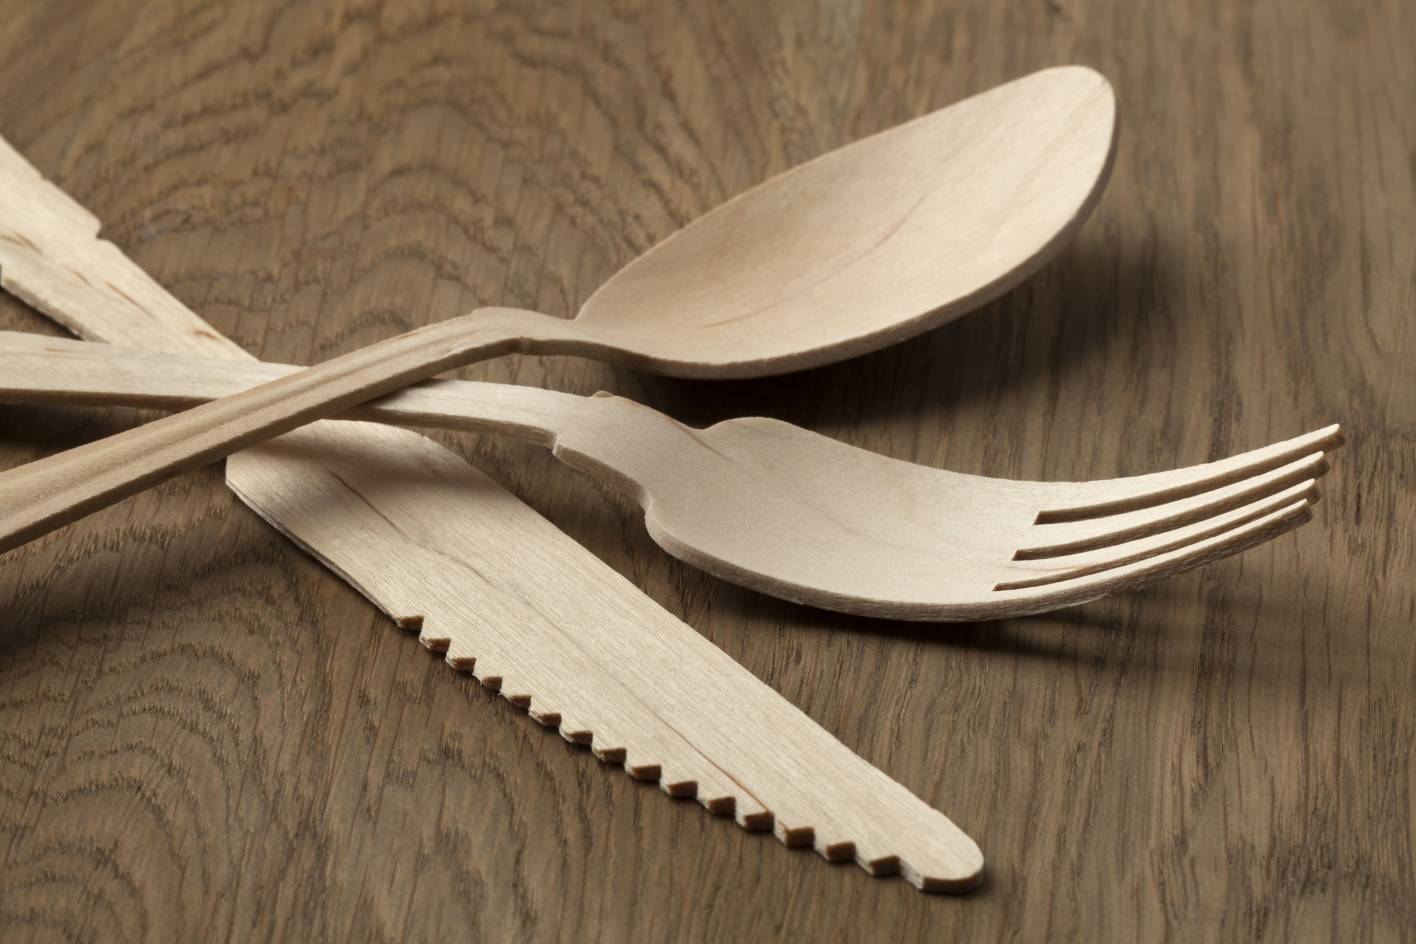 wooden-fork-knife-and-spoon-pmfrdem-min_1.jpg